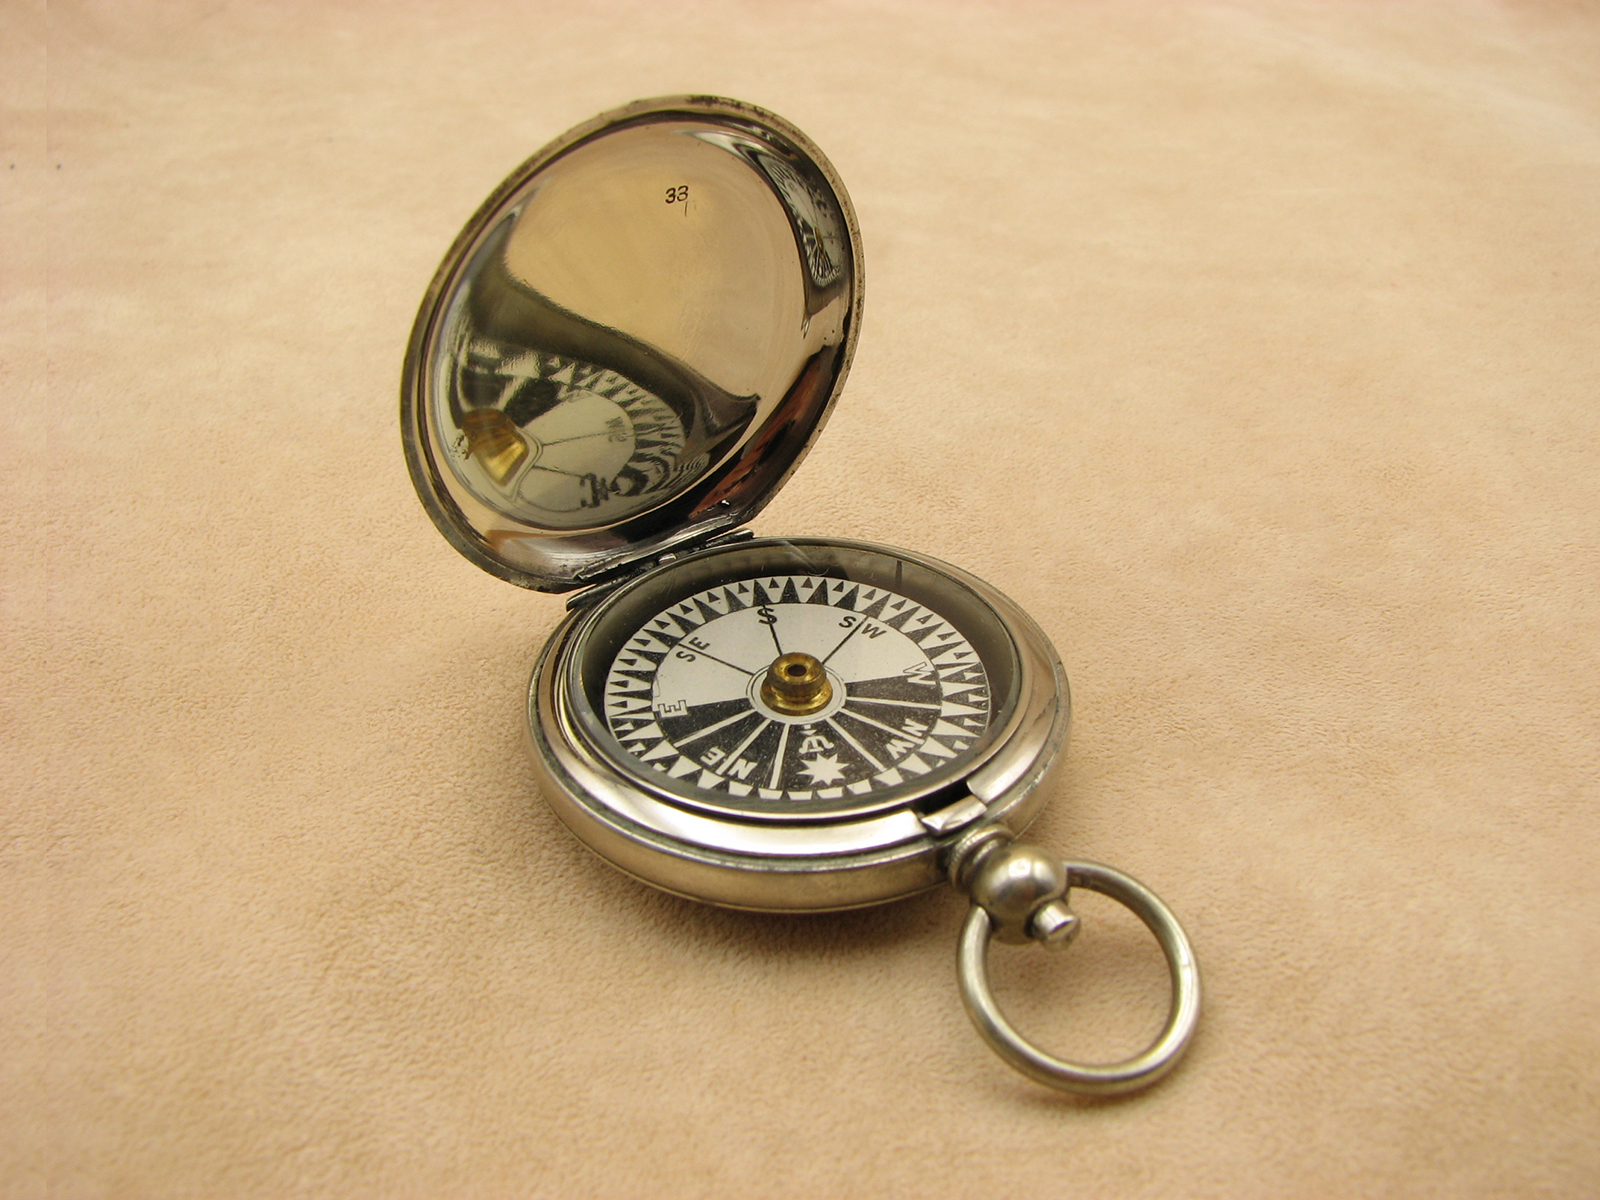 Rare Short and Mason MK V pocket compass dated 1910